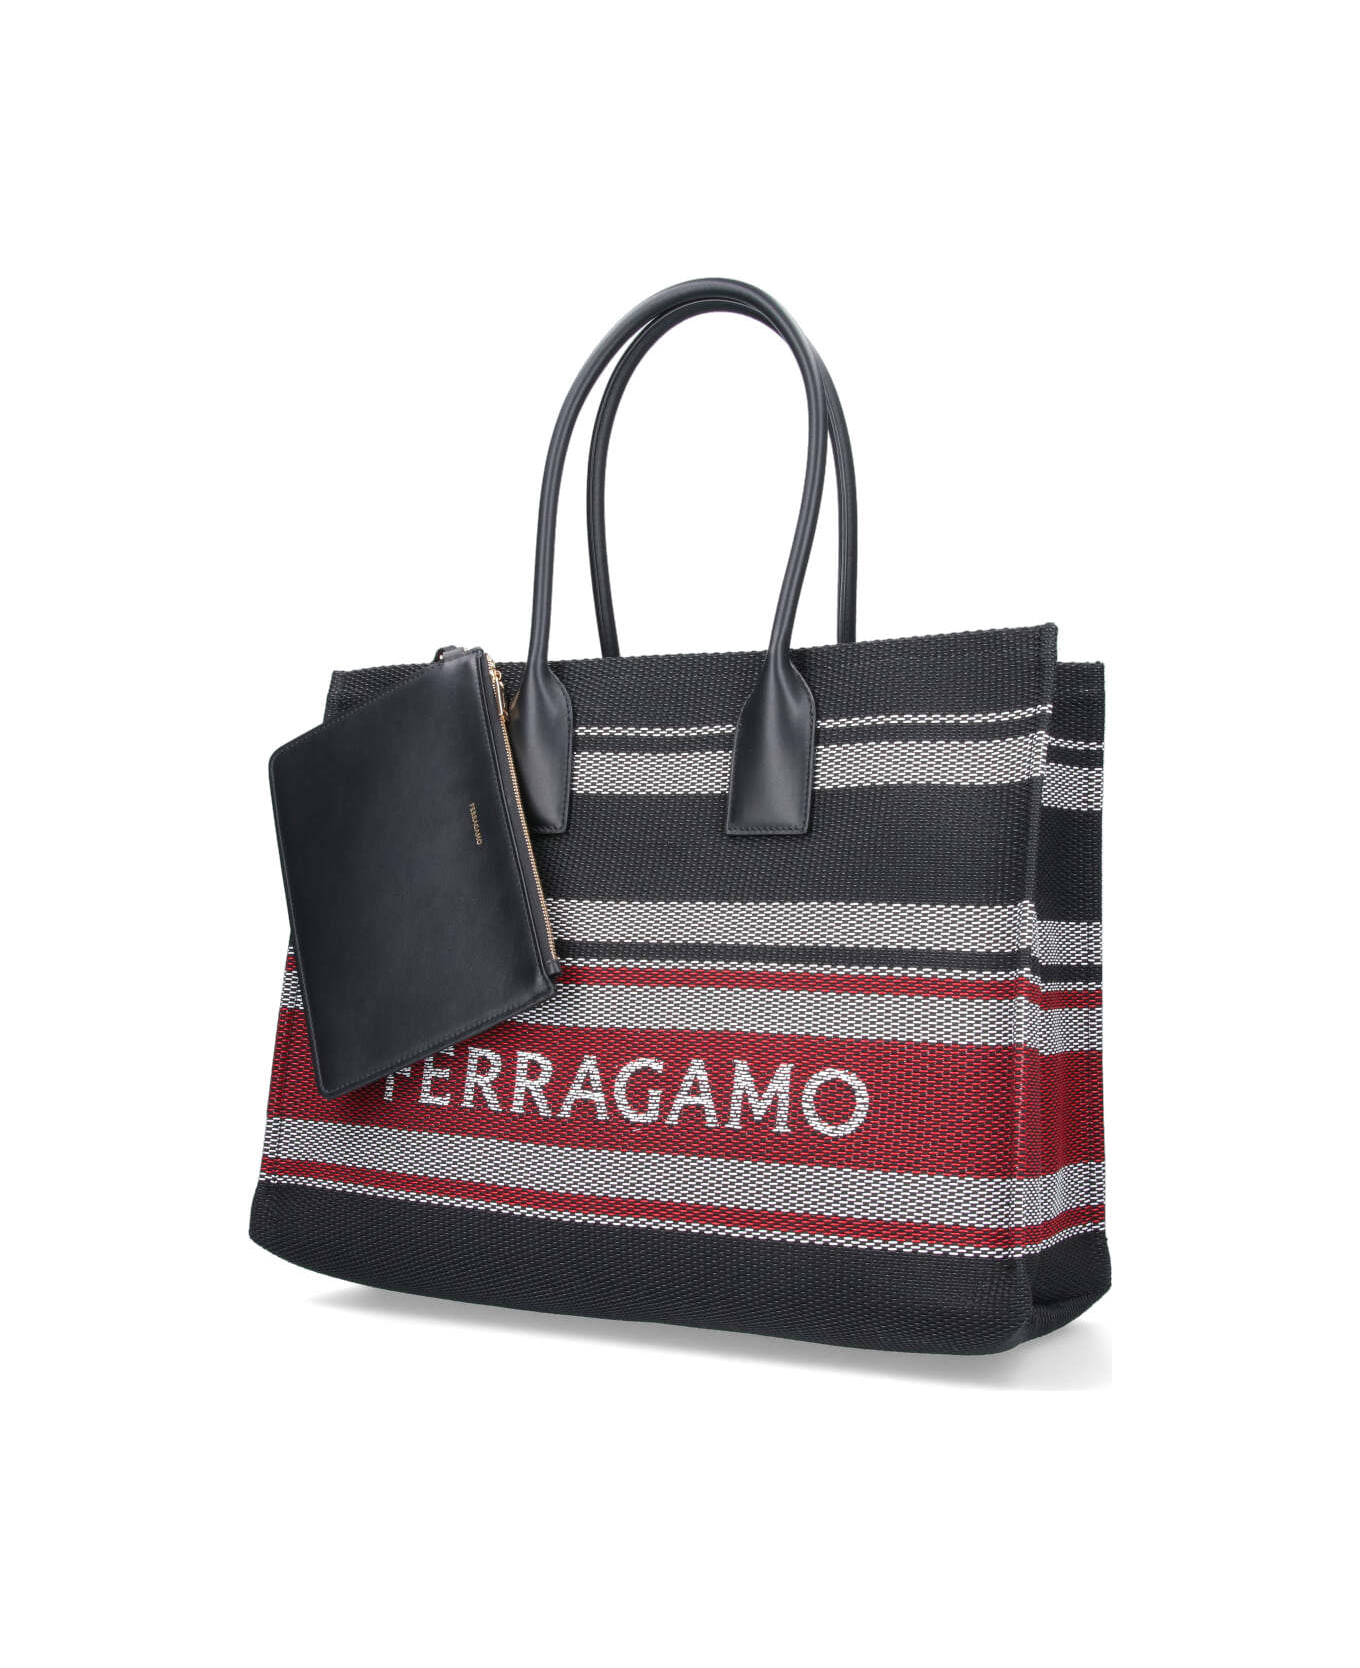 Ferragamo Logo Tote Bag - Black, red